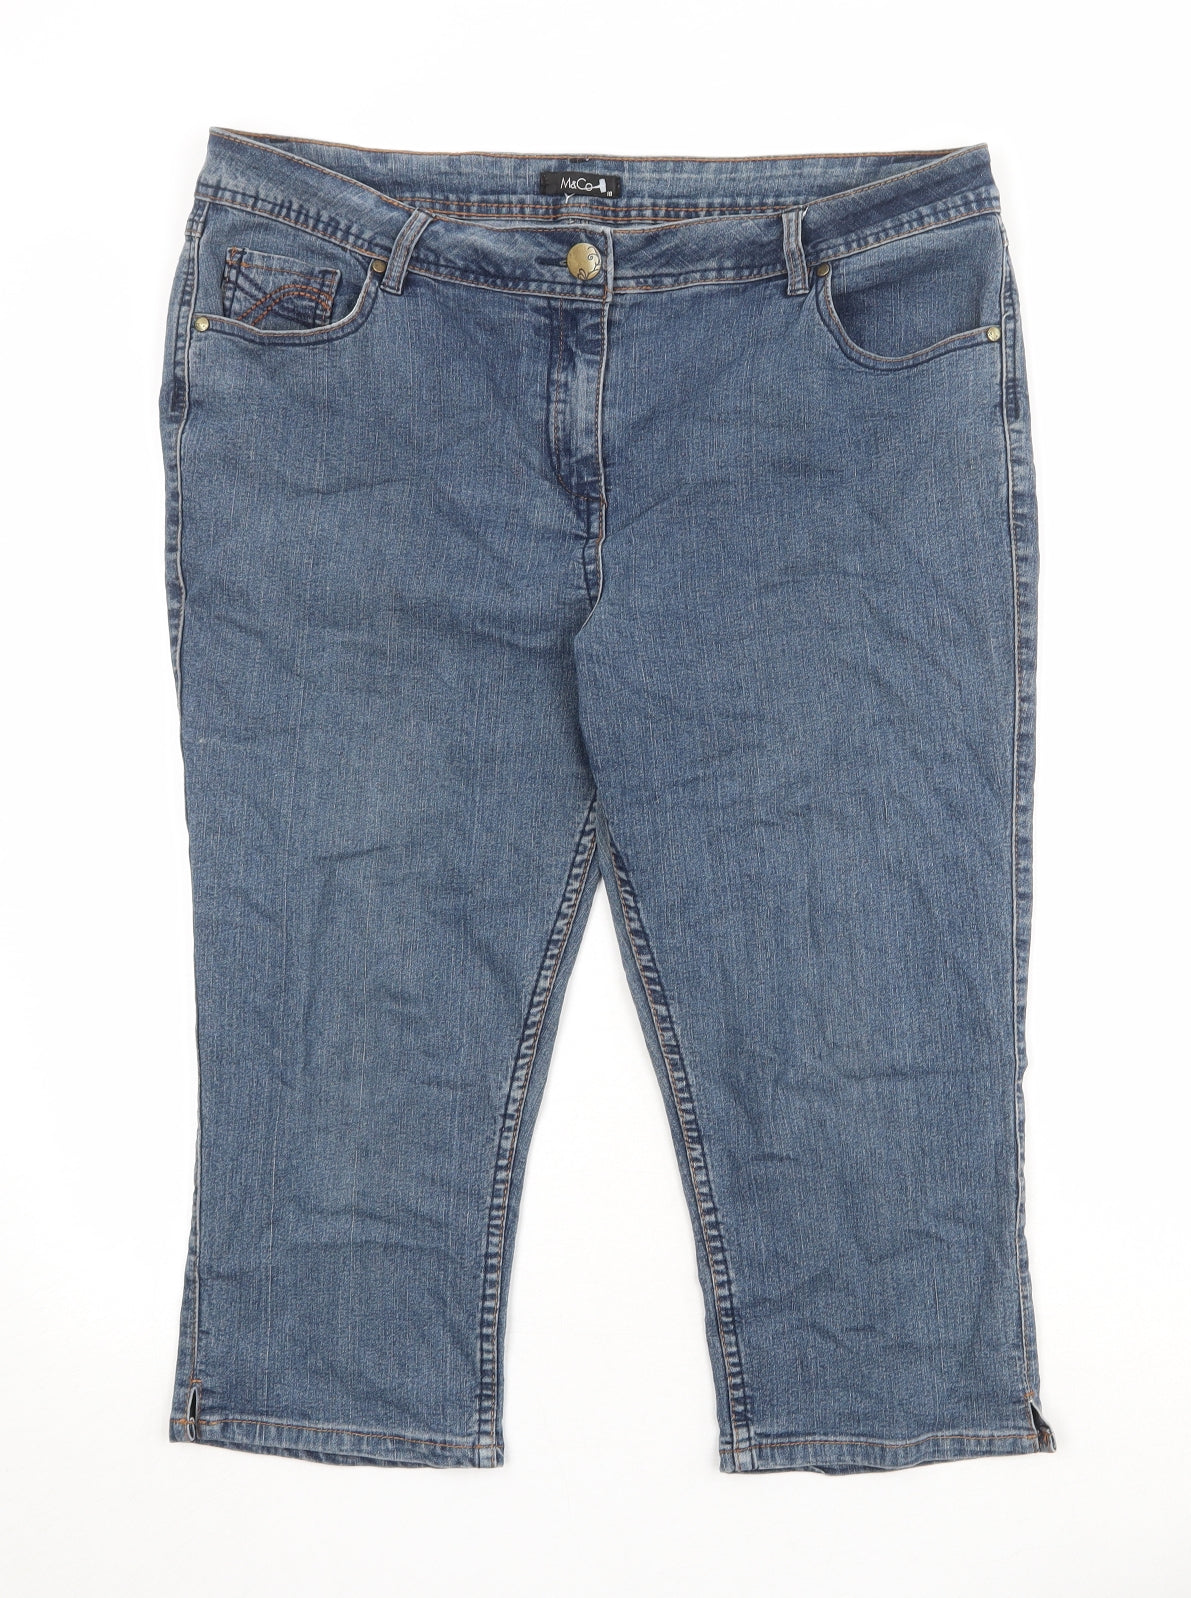 M&Co Womens Blue Cotton Skinny Jeans Size 18 Regular Zip